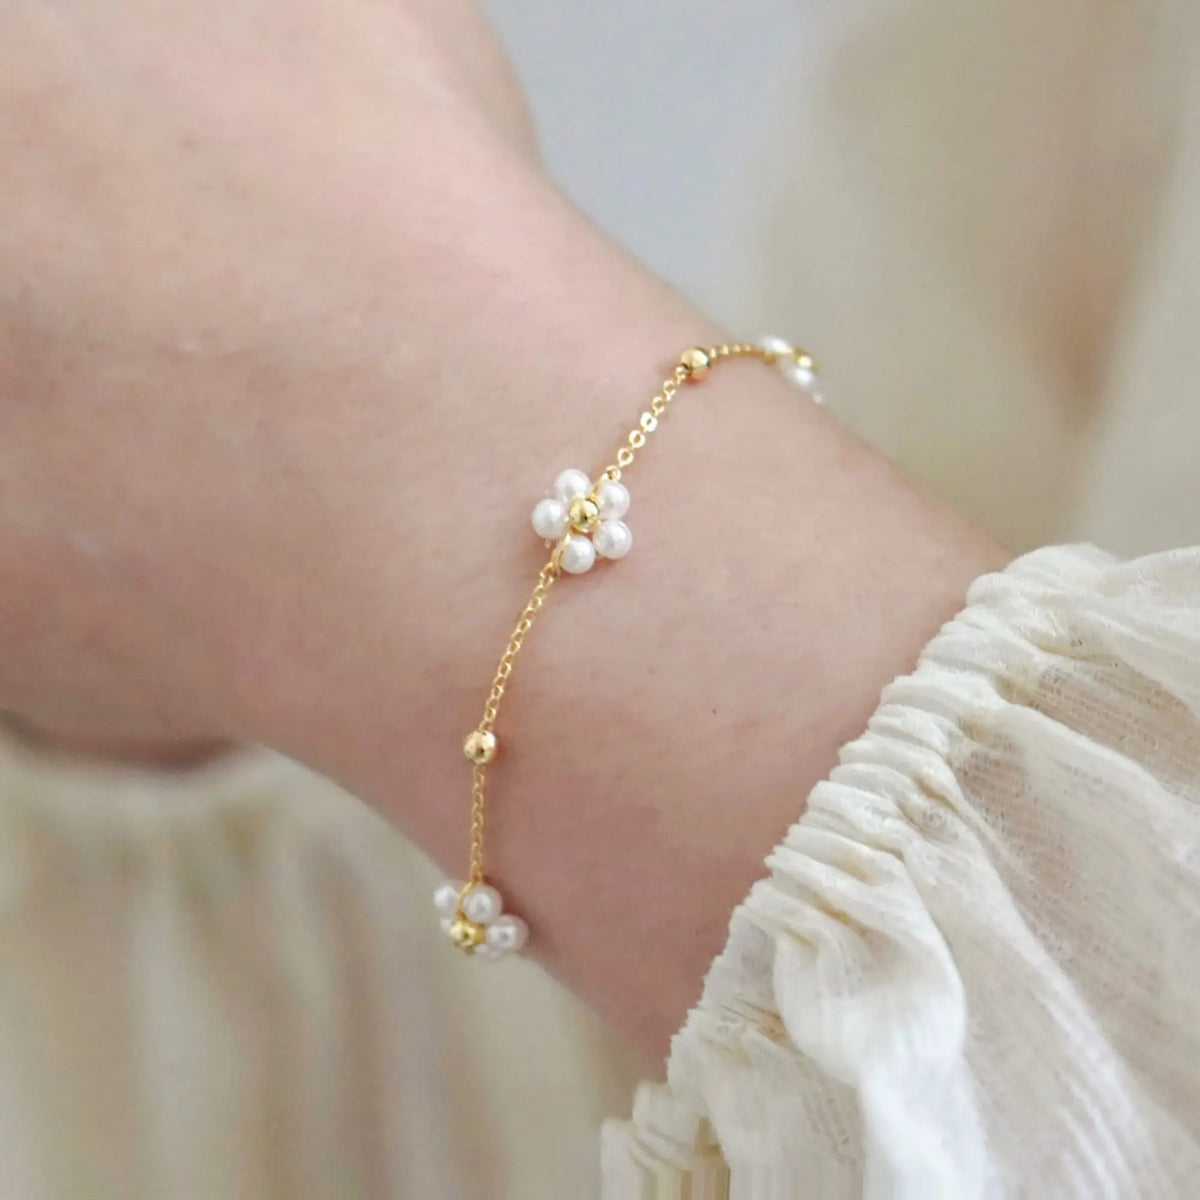 White daisy bracelet